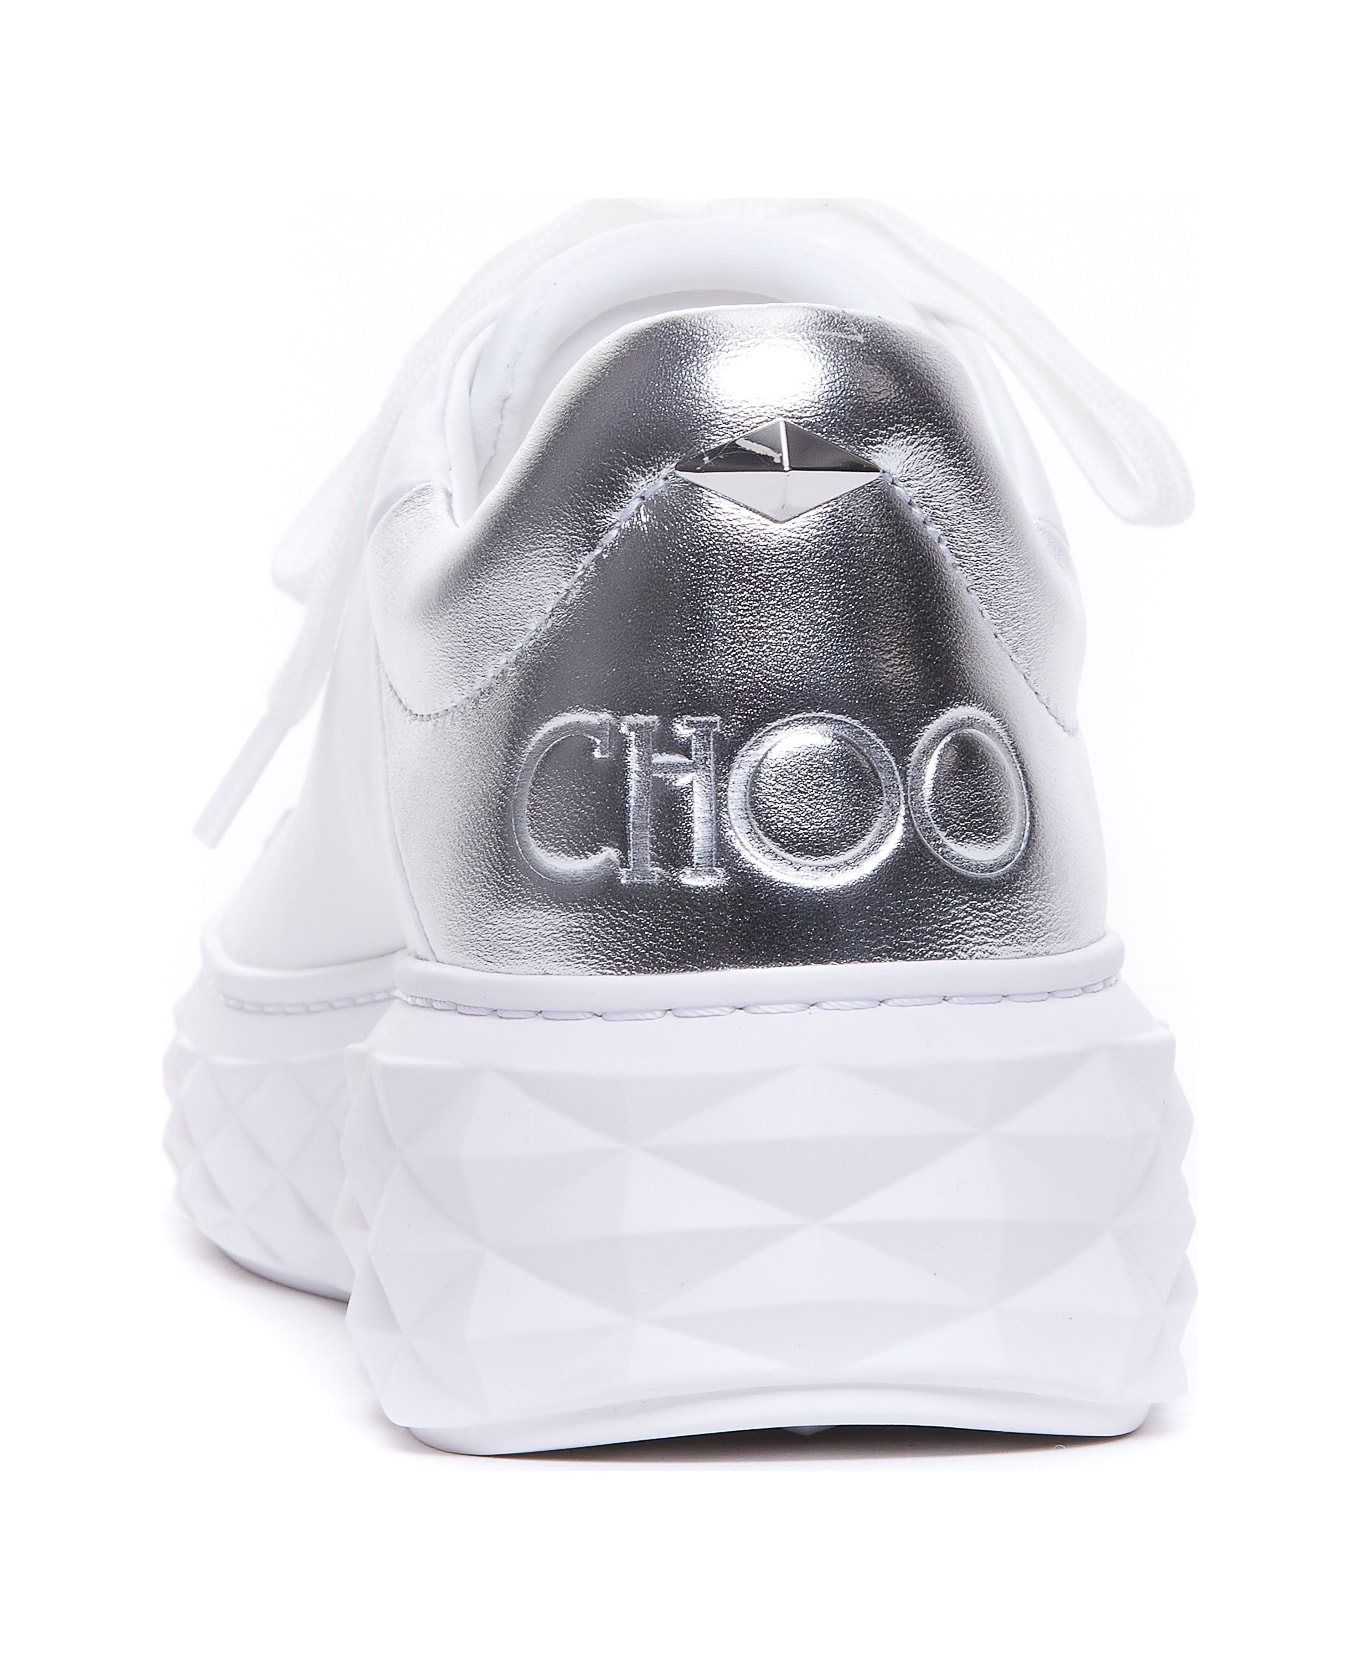 Jimmy Choo Diamond Maxi Sneakers - White Silver